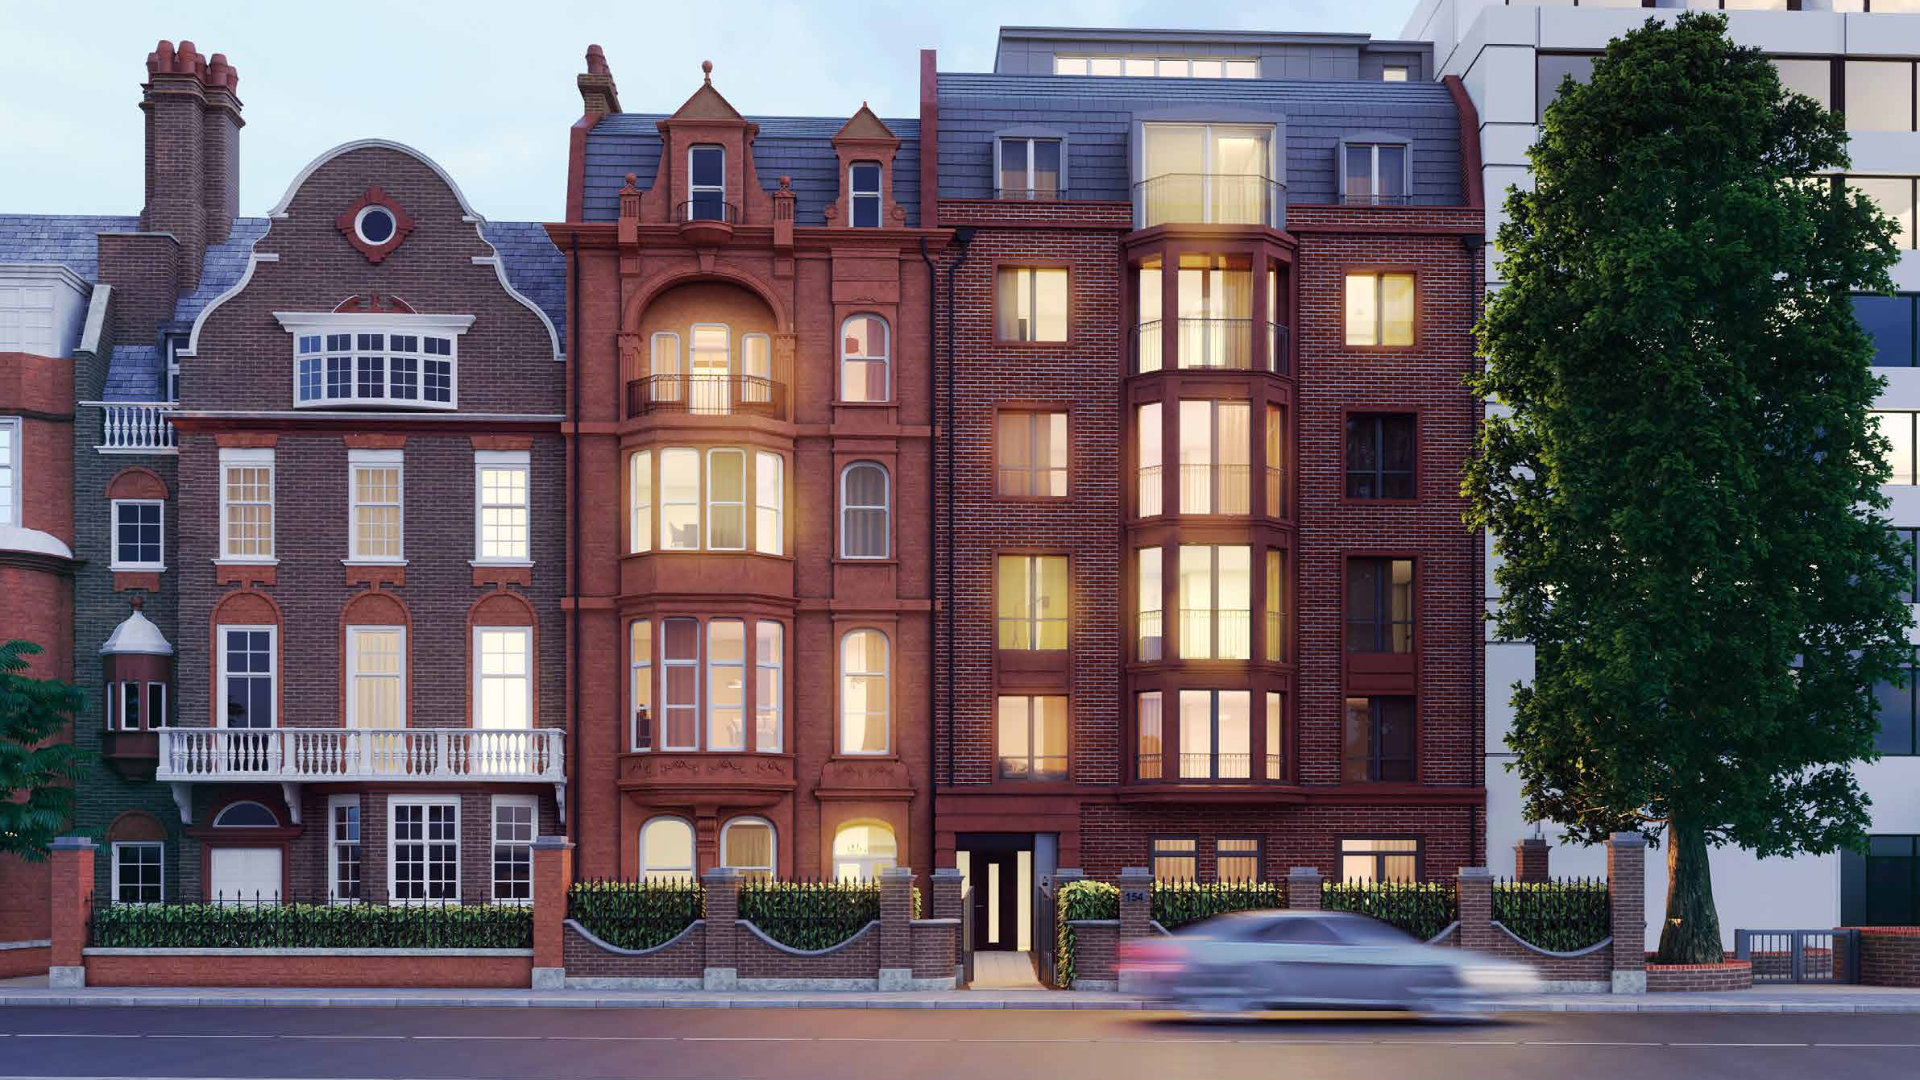 2 Bedroom Penthouse For Sale Elie Saab Residences London Lp11140 11863200b186c100.png